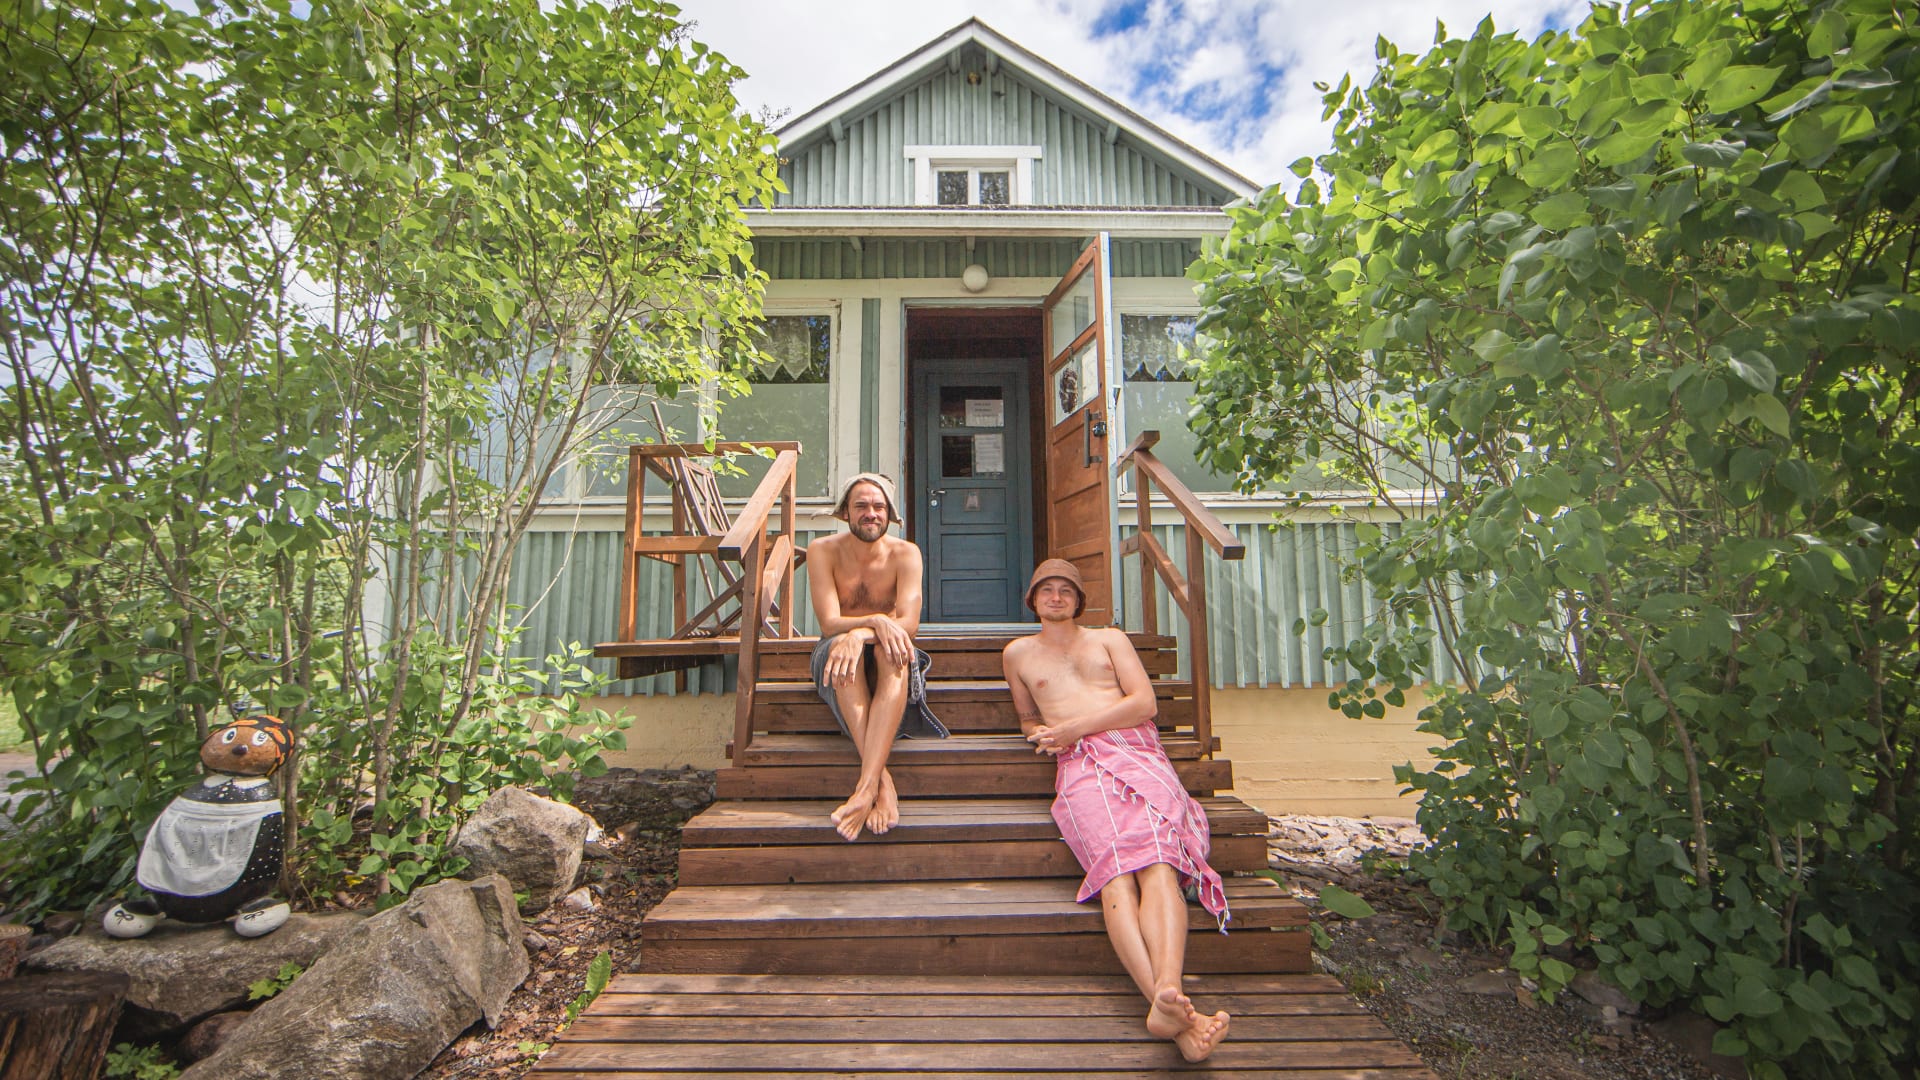 Juha and Matti sitting on the porch of Nekalan Puutarha public sauna